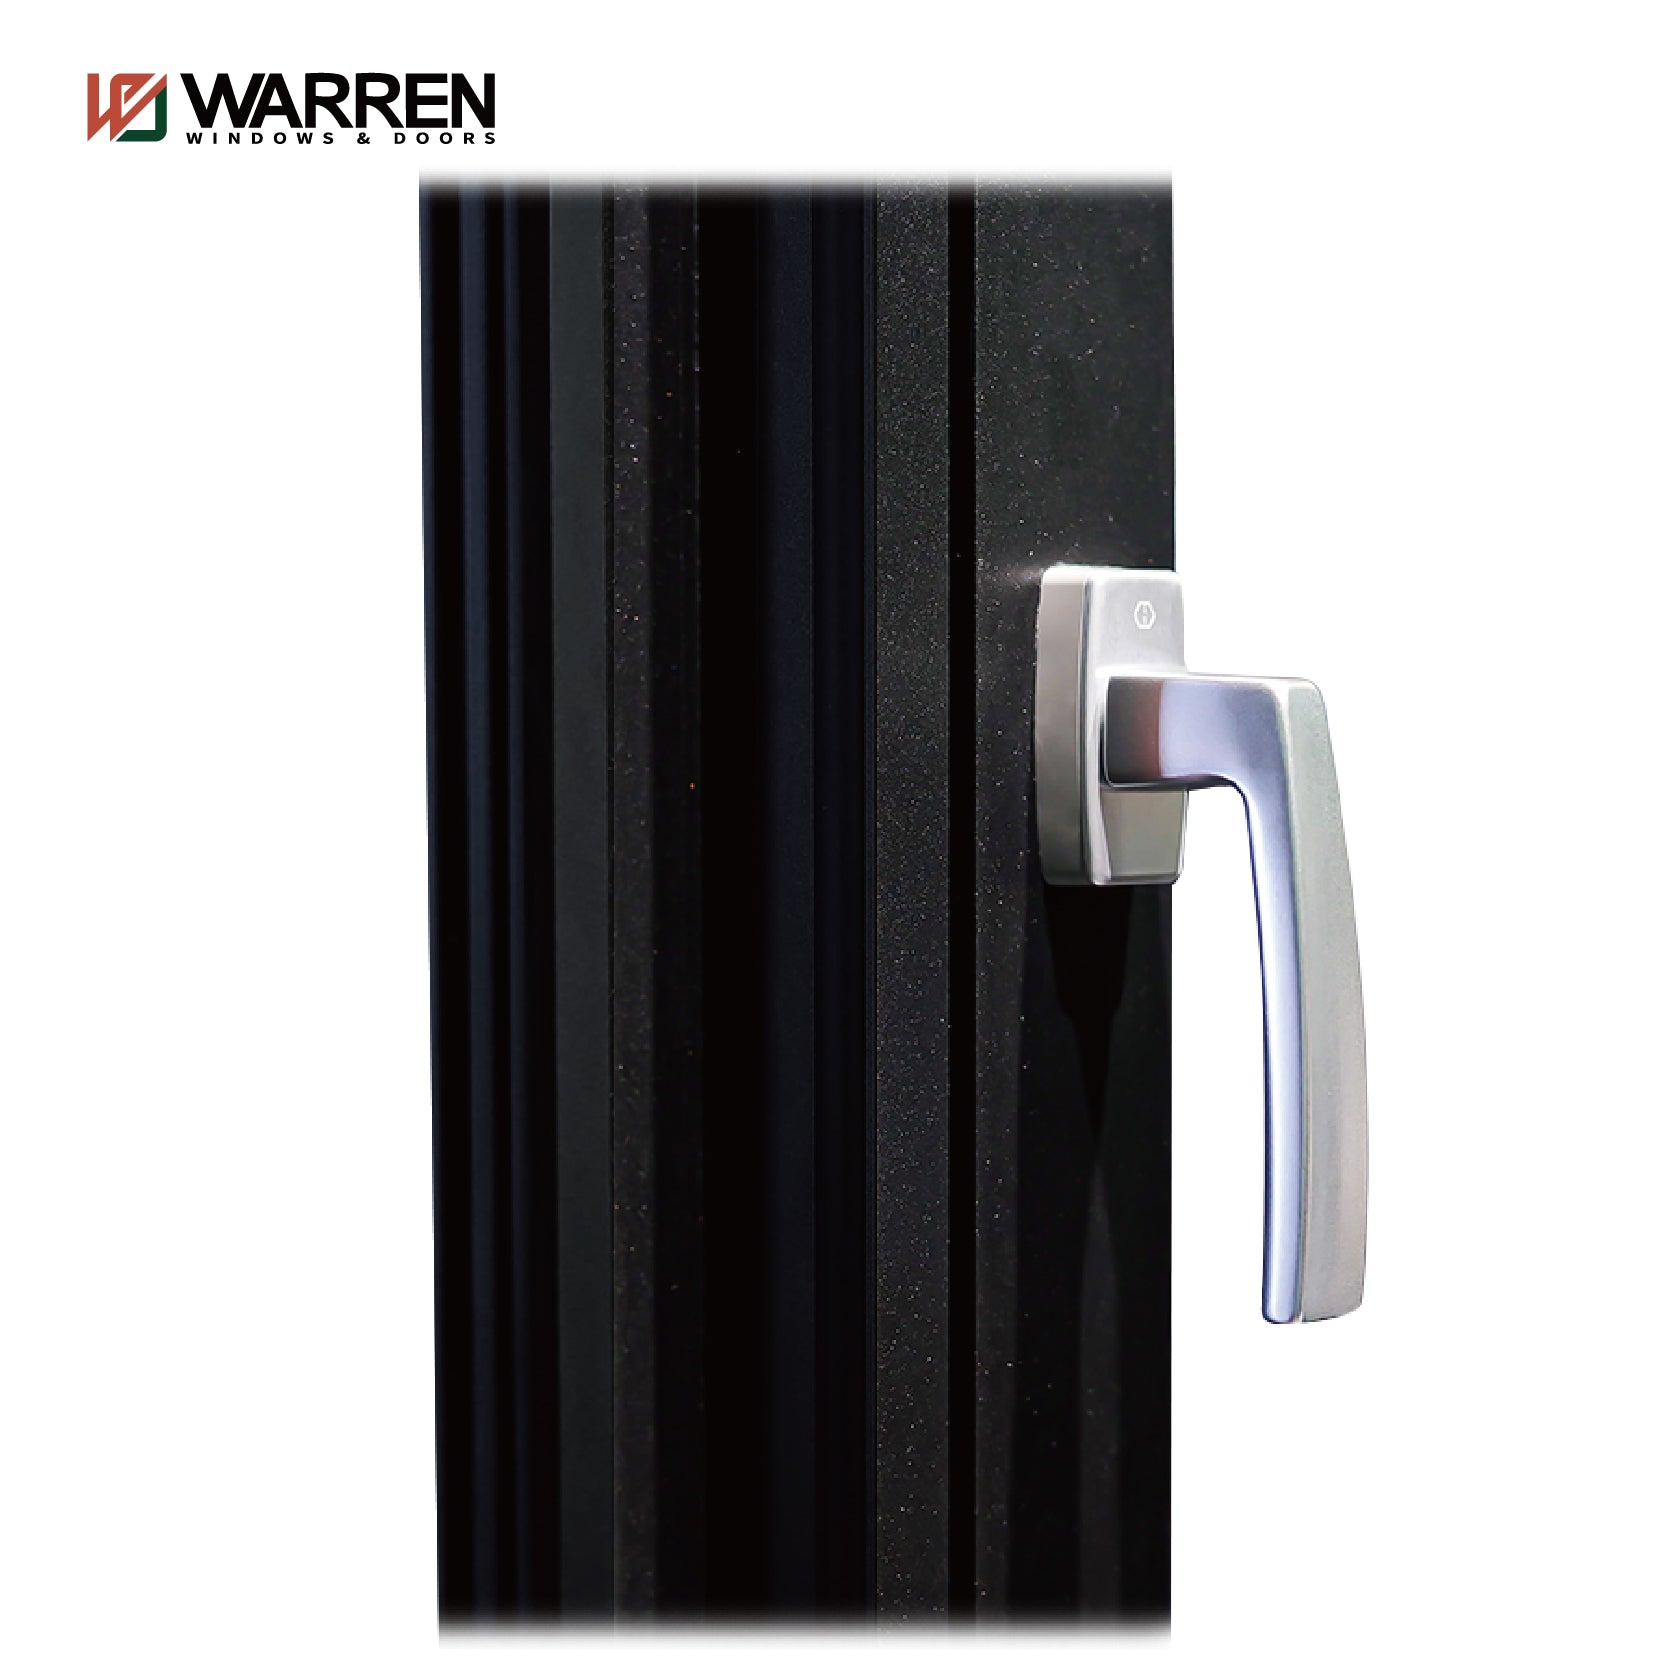 Warren Factory Wholesale Aluminum Tilt And Turn Windows Heat Insulation Aluminum Casement Window With Screens